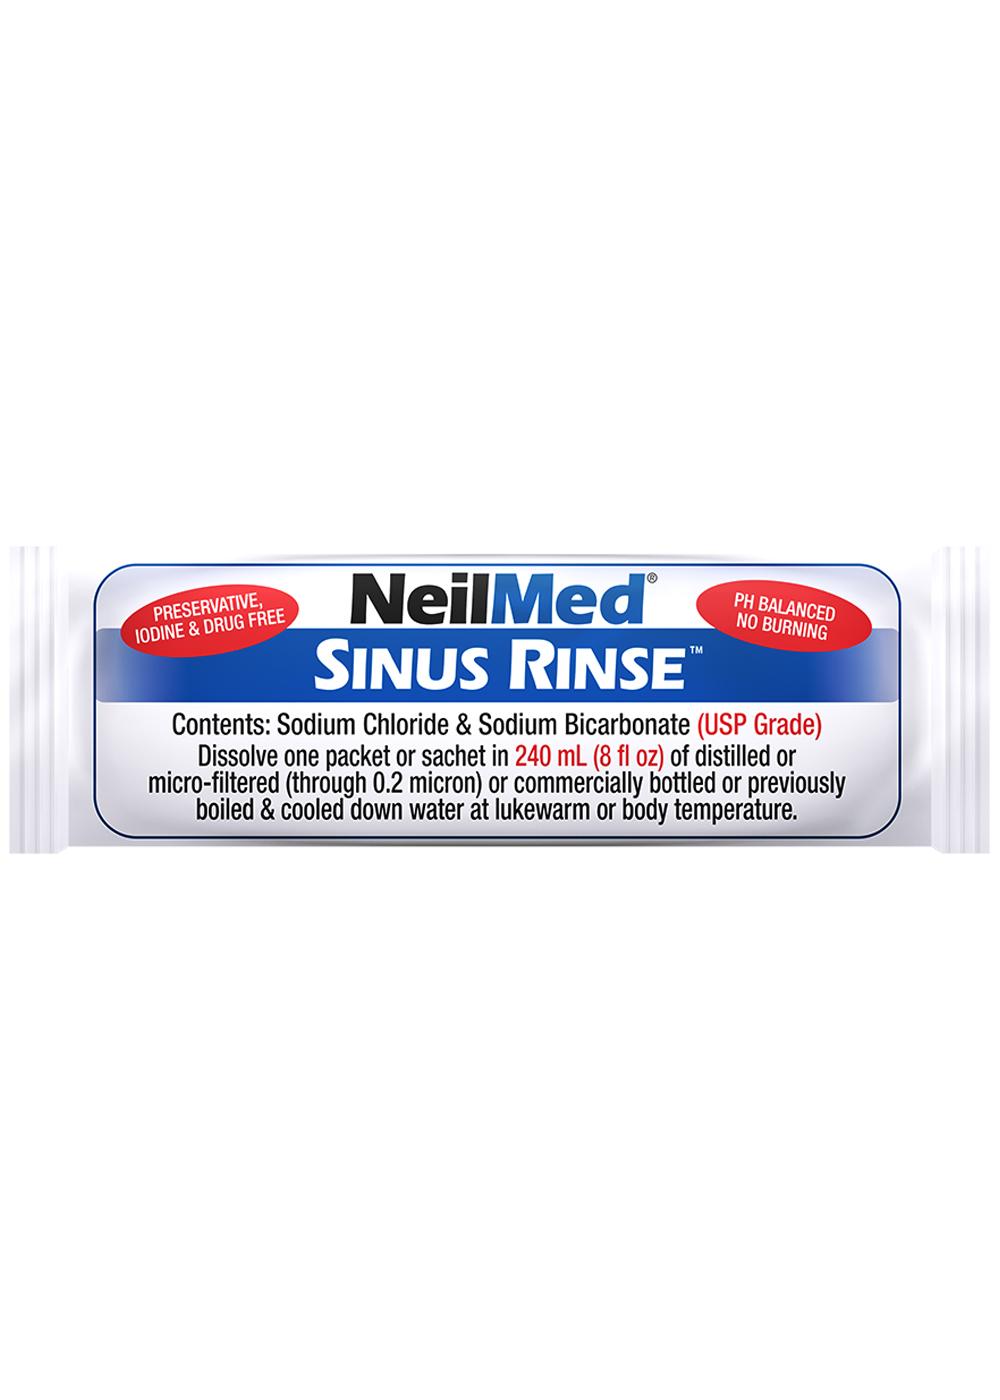 NeilMed Original Sinus Rinse Complete Kit; image 2 of 6